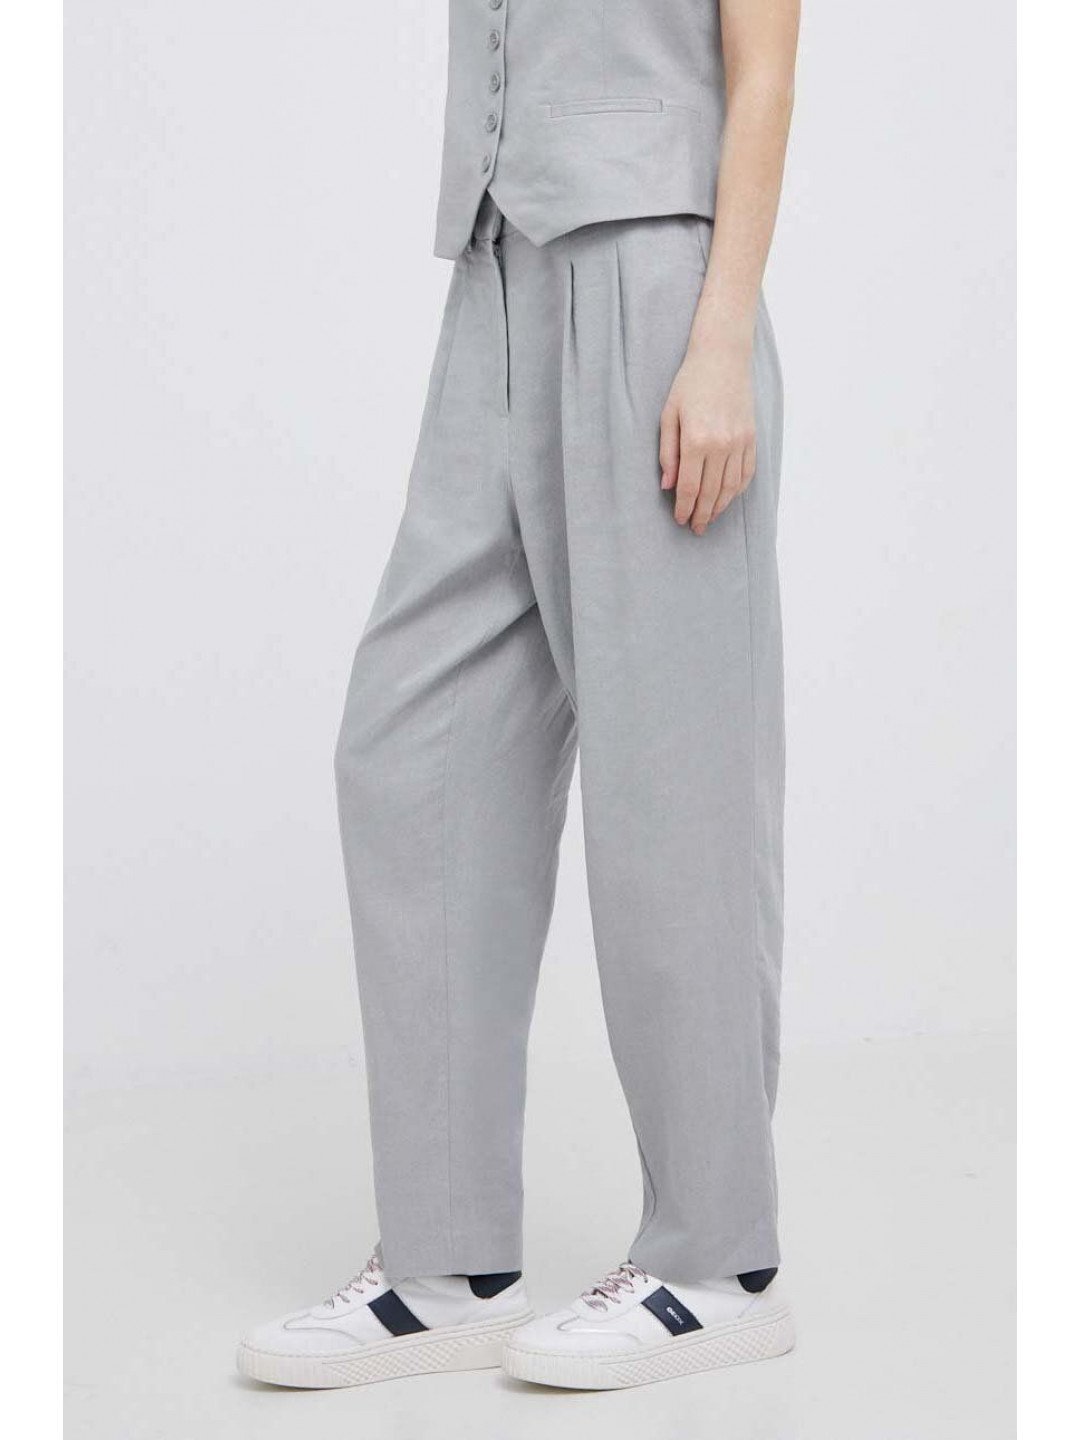 Plátěné kalhoty Dkny šedá barva přiléhavé high waist